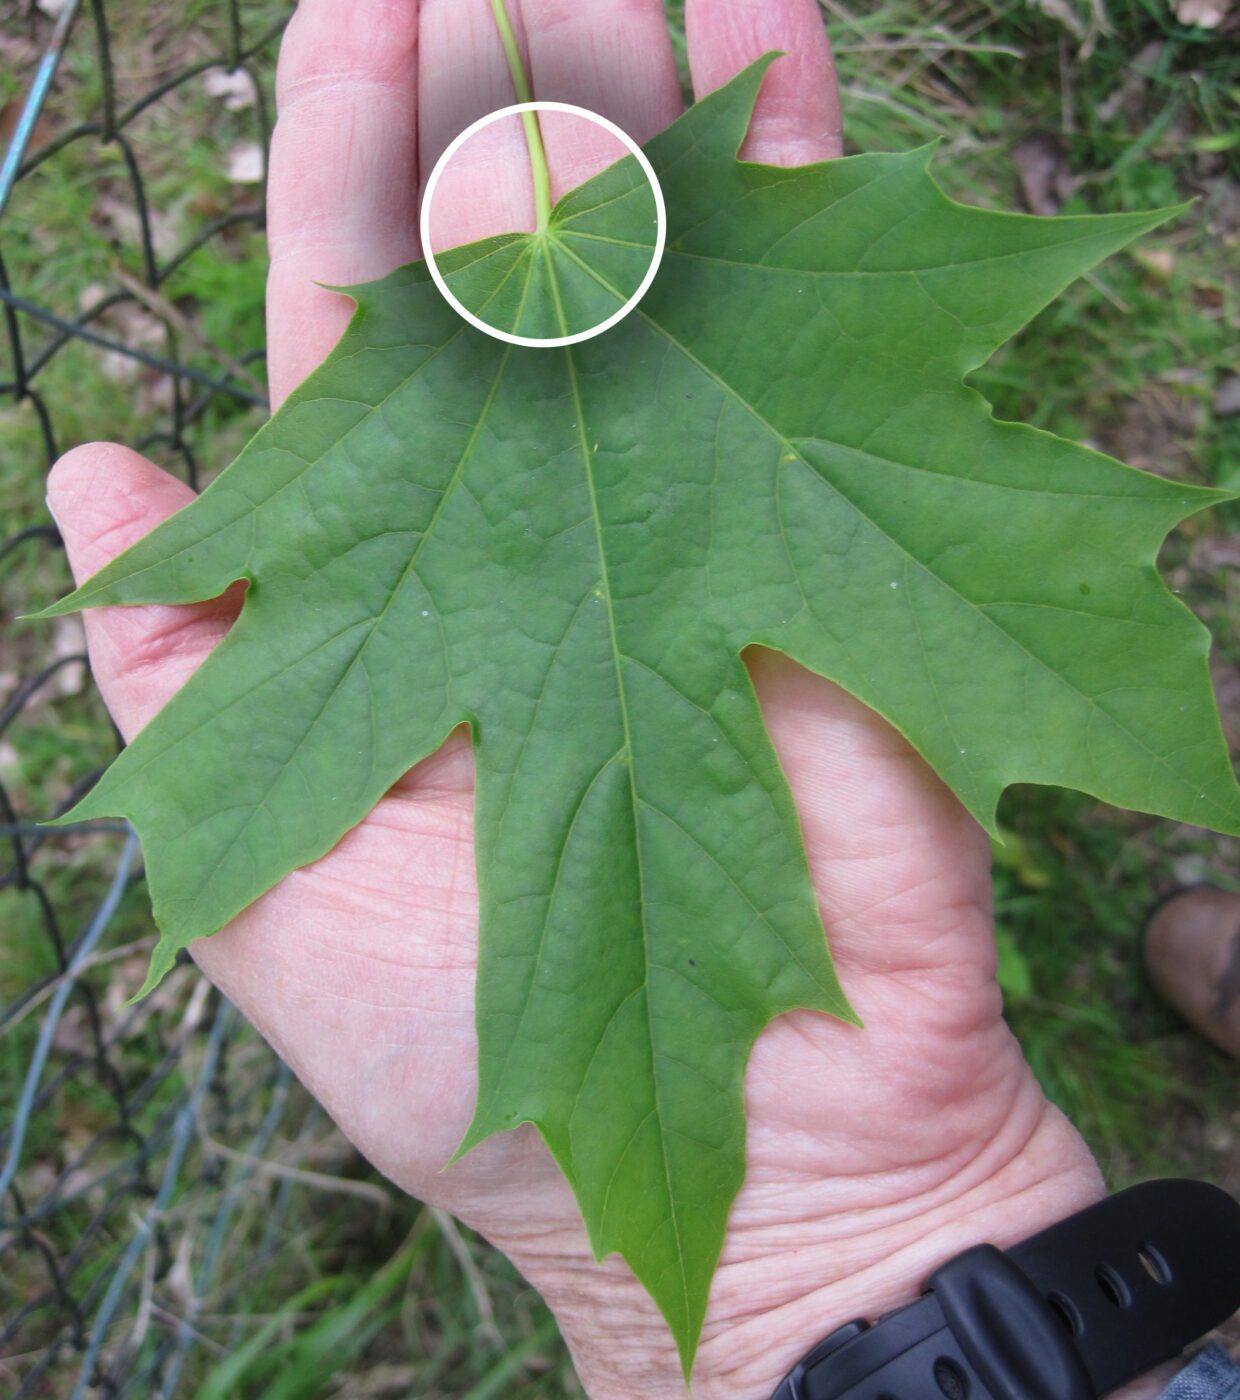 Norway Maple lobed leaf